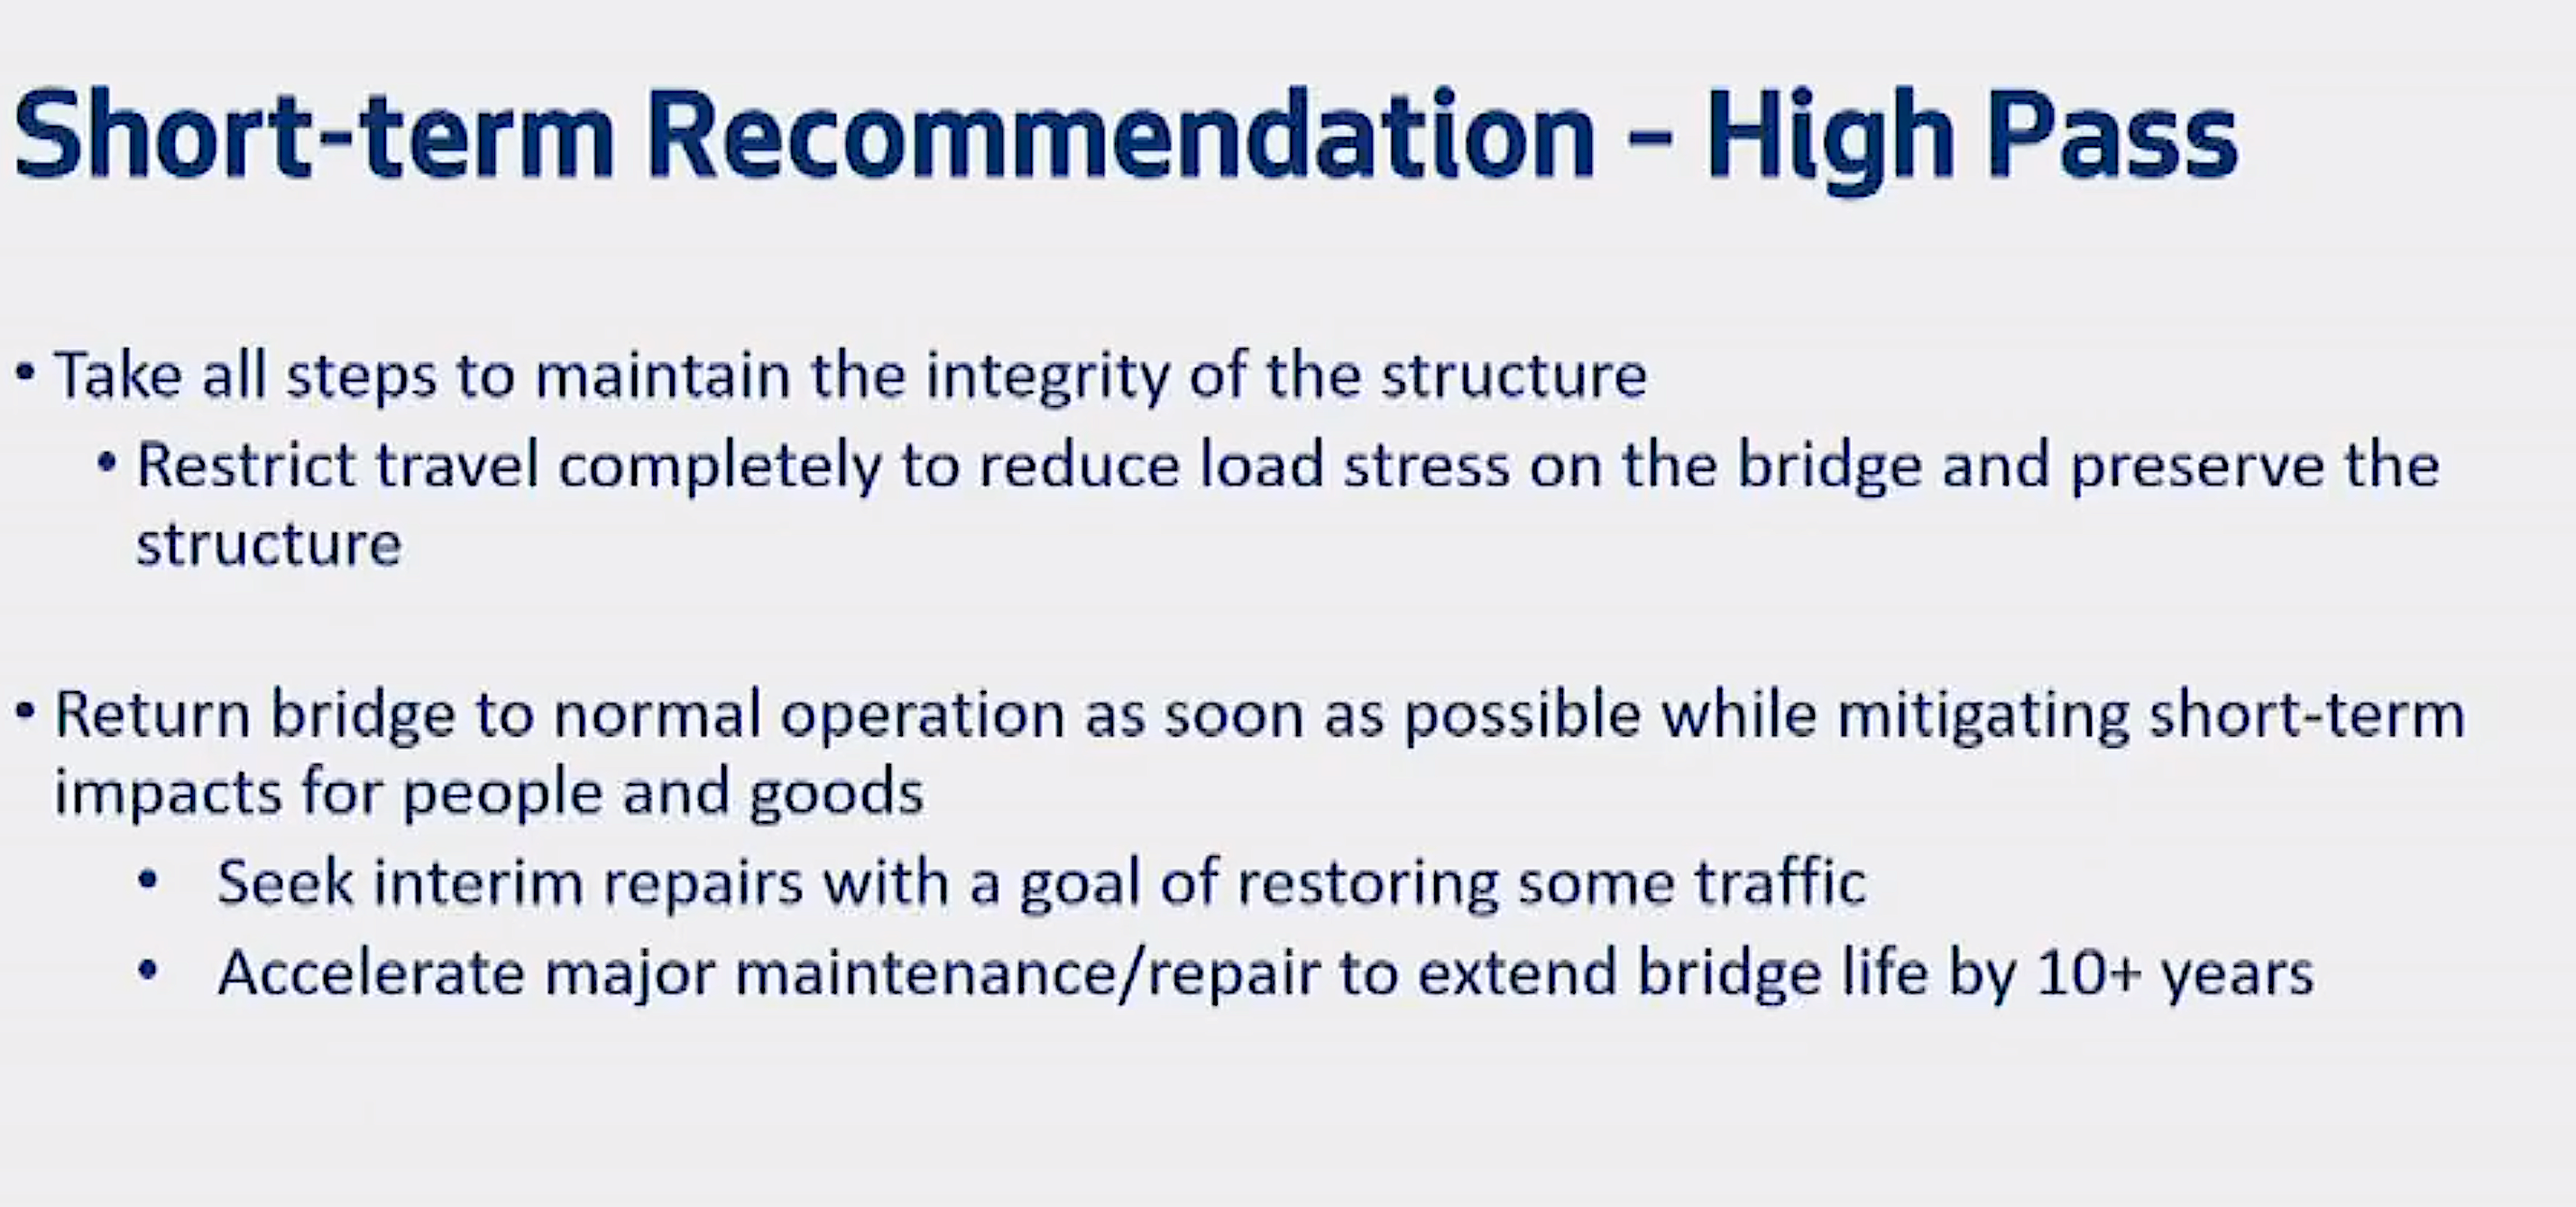 short term recommendations for high pass bridge